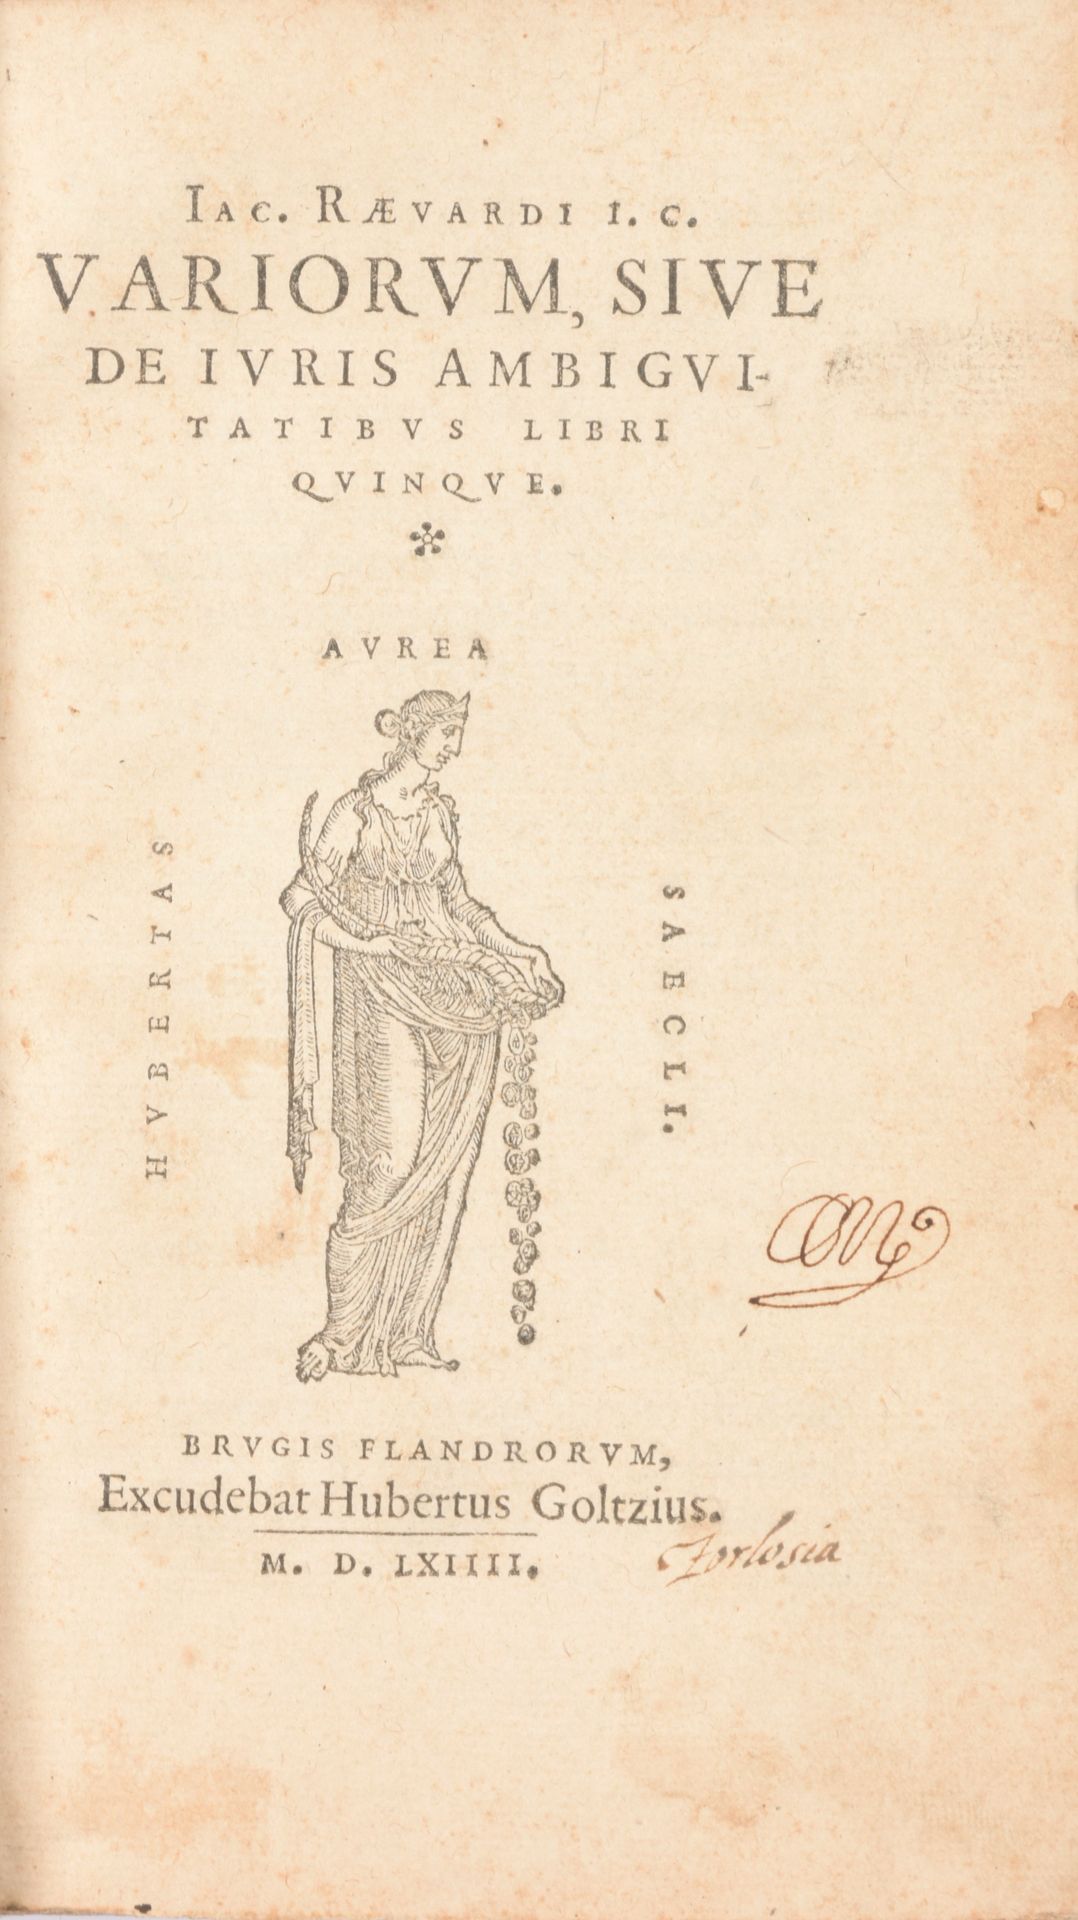 RAEVARDUS, Jacobus Variorvm, sive De ivris ambigvitatibvs libri qvinqve

8vo, 33&hellip;